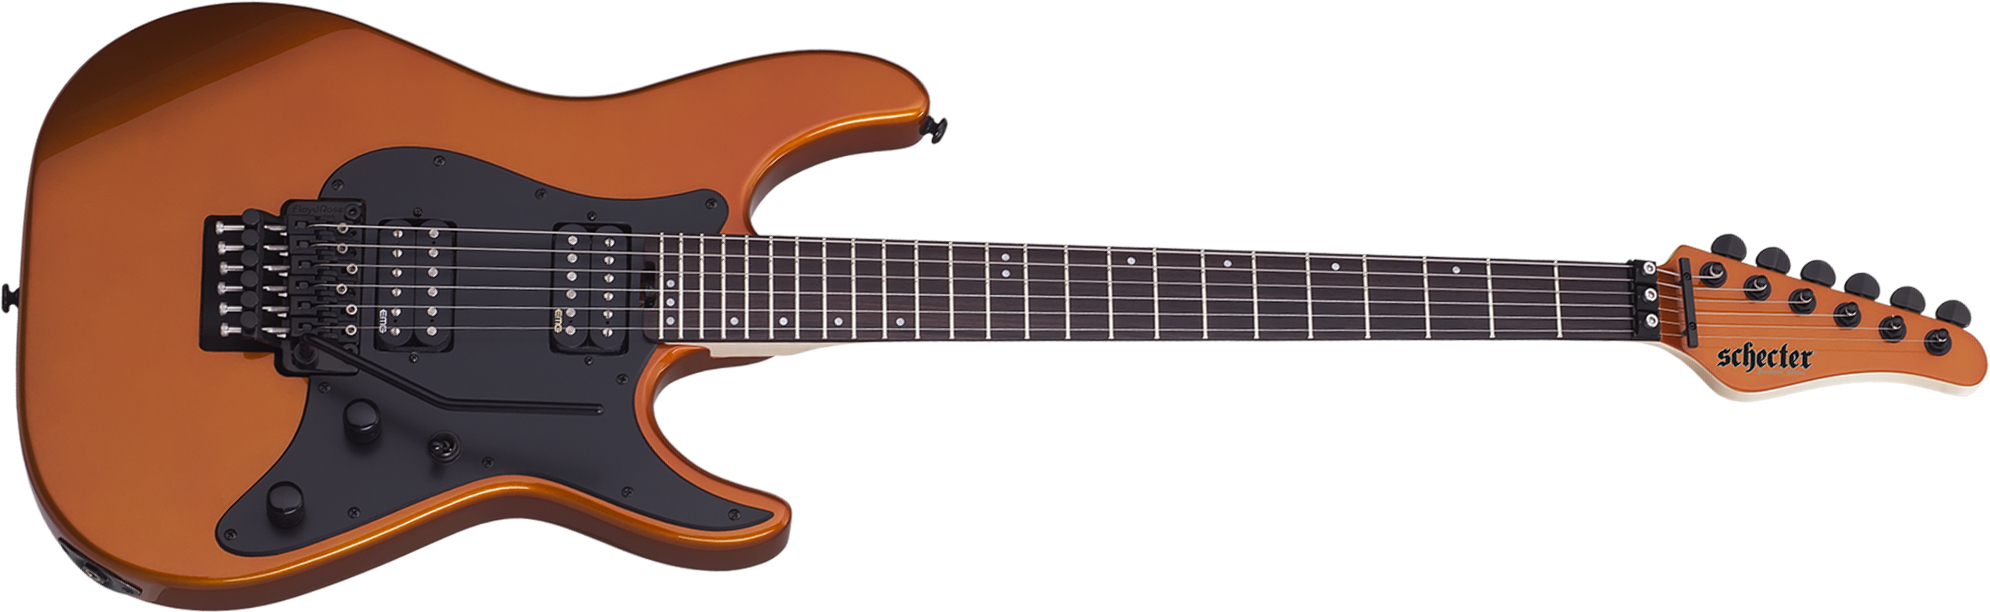 Schecter Sun Valley Super Shredder Fr 2h Emg Rw - Lambo Orange - Guitarra eléctrica con forma de tel - Main picture